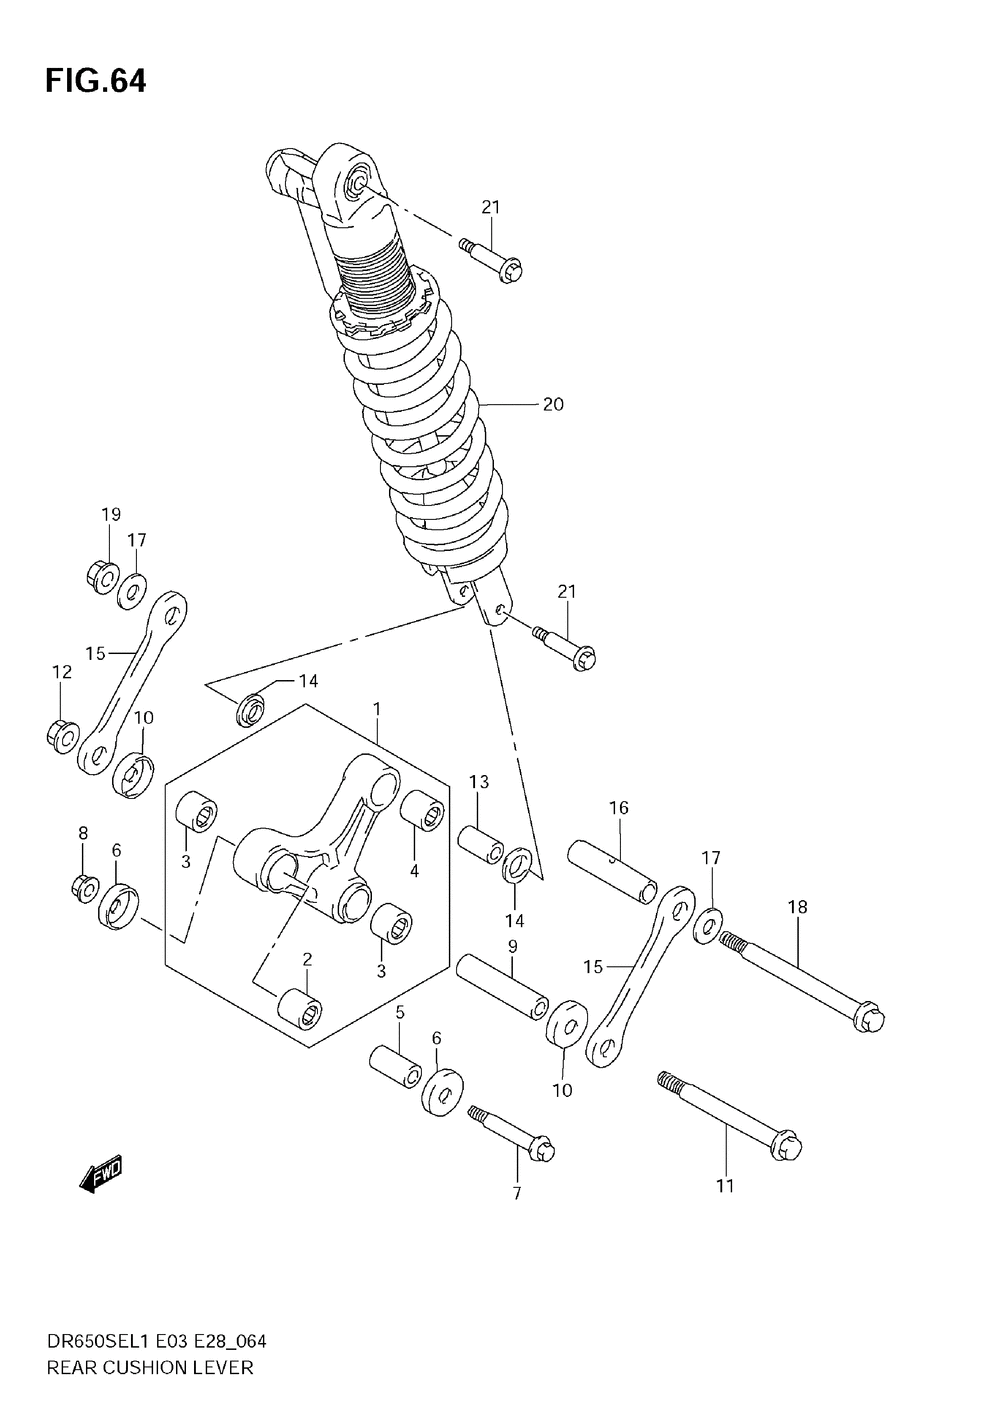 Rear cushion lever (e28)